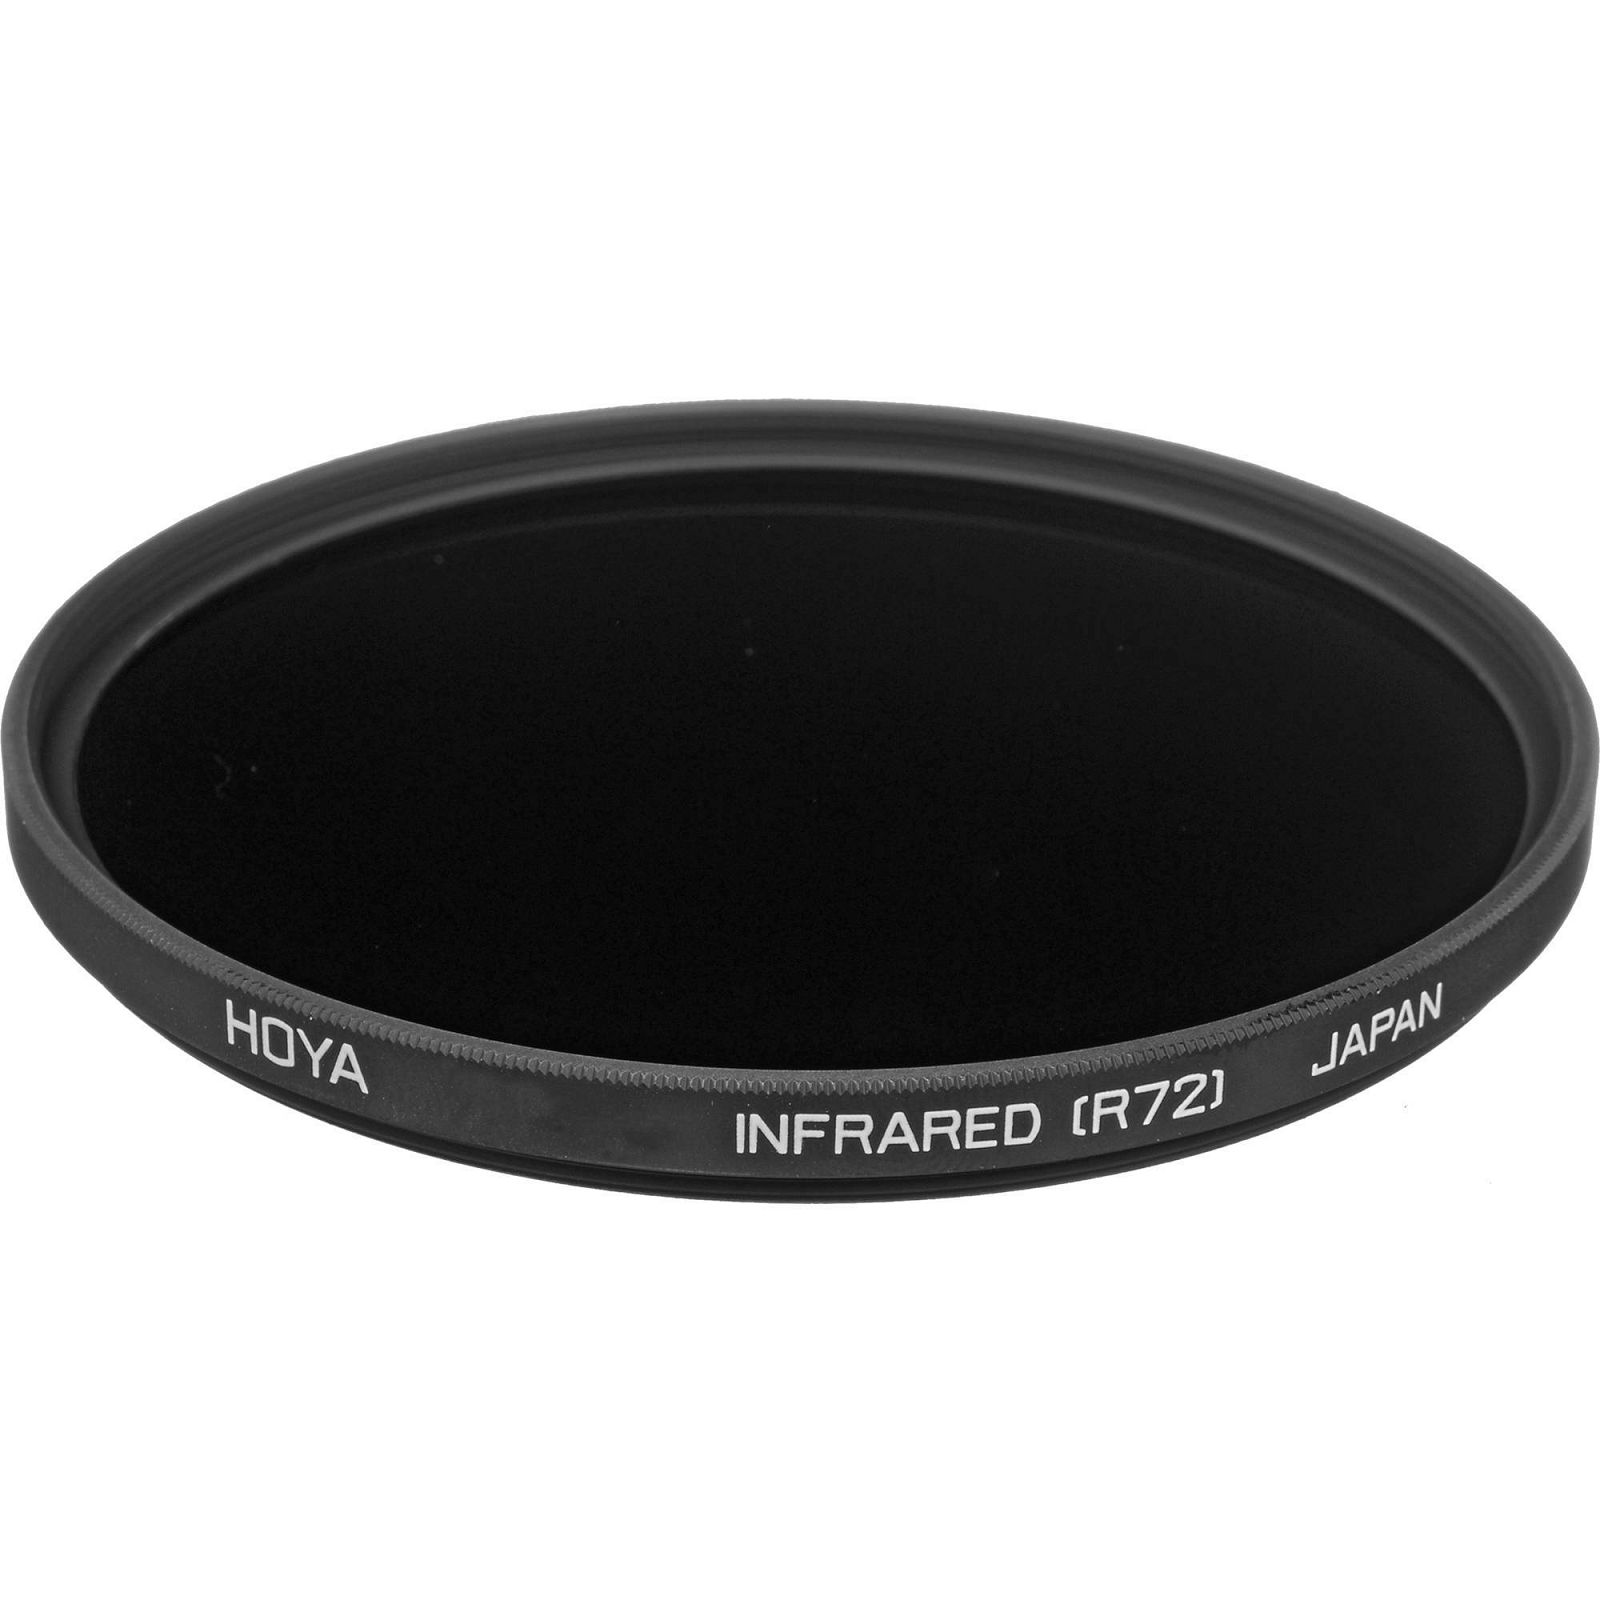 Hoya Infrared R72 filter 46mm